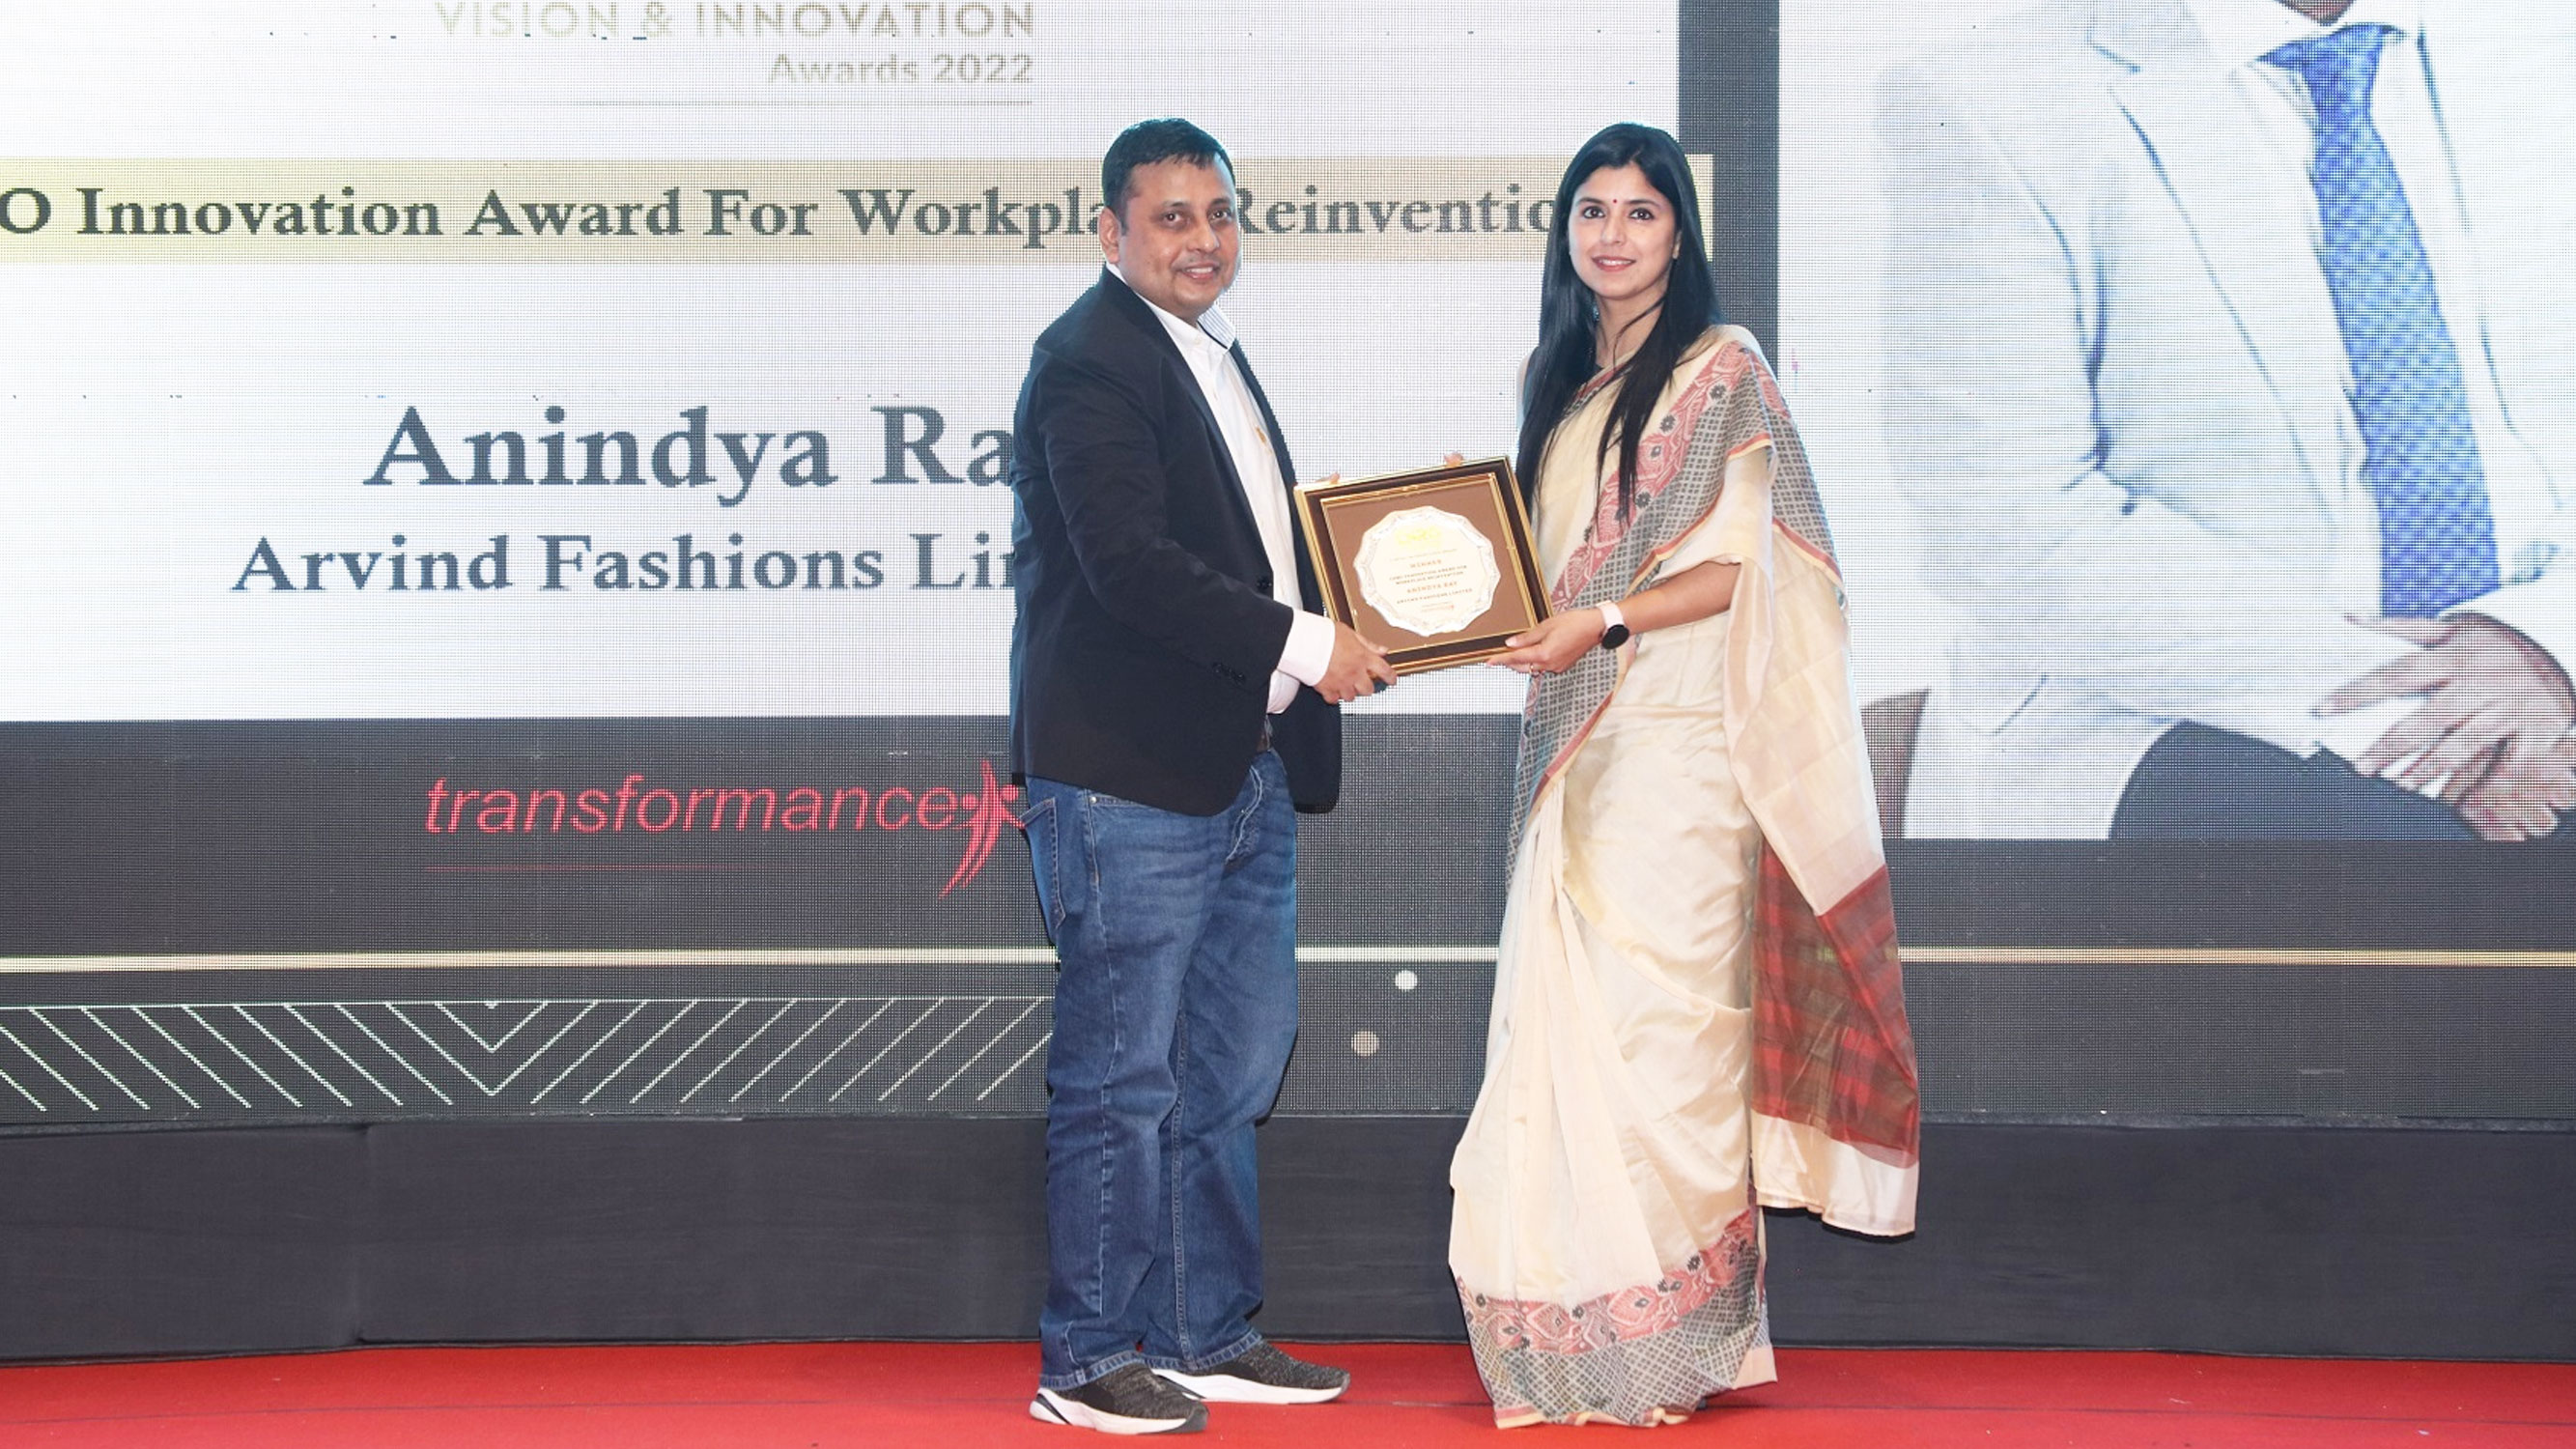 Anindya Ray, Arvind Fashions Limited